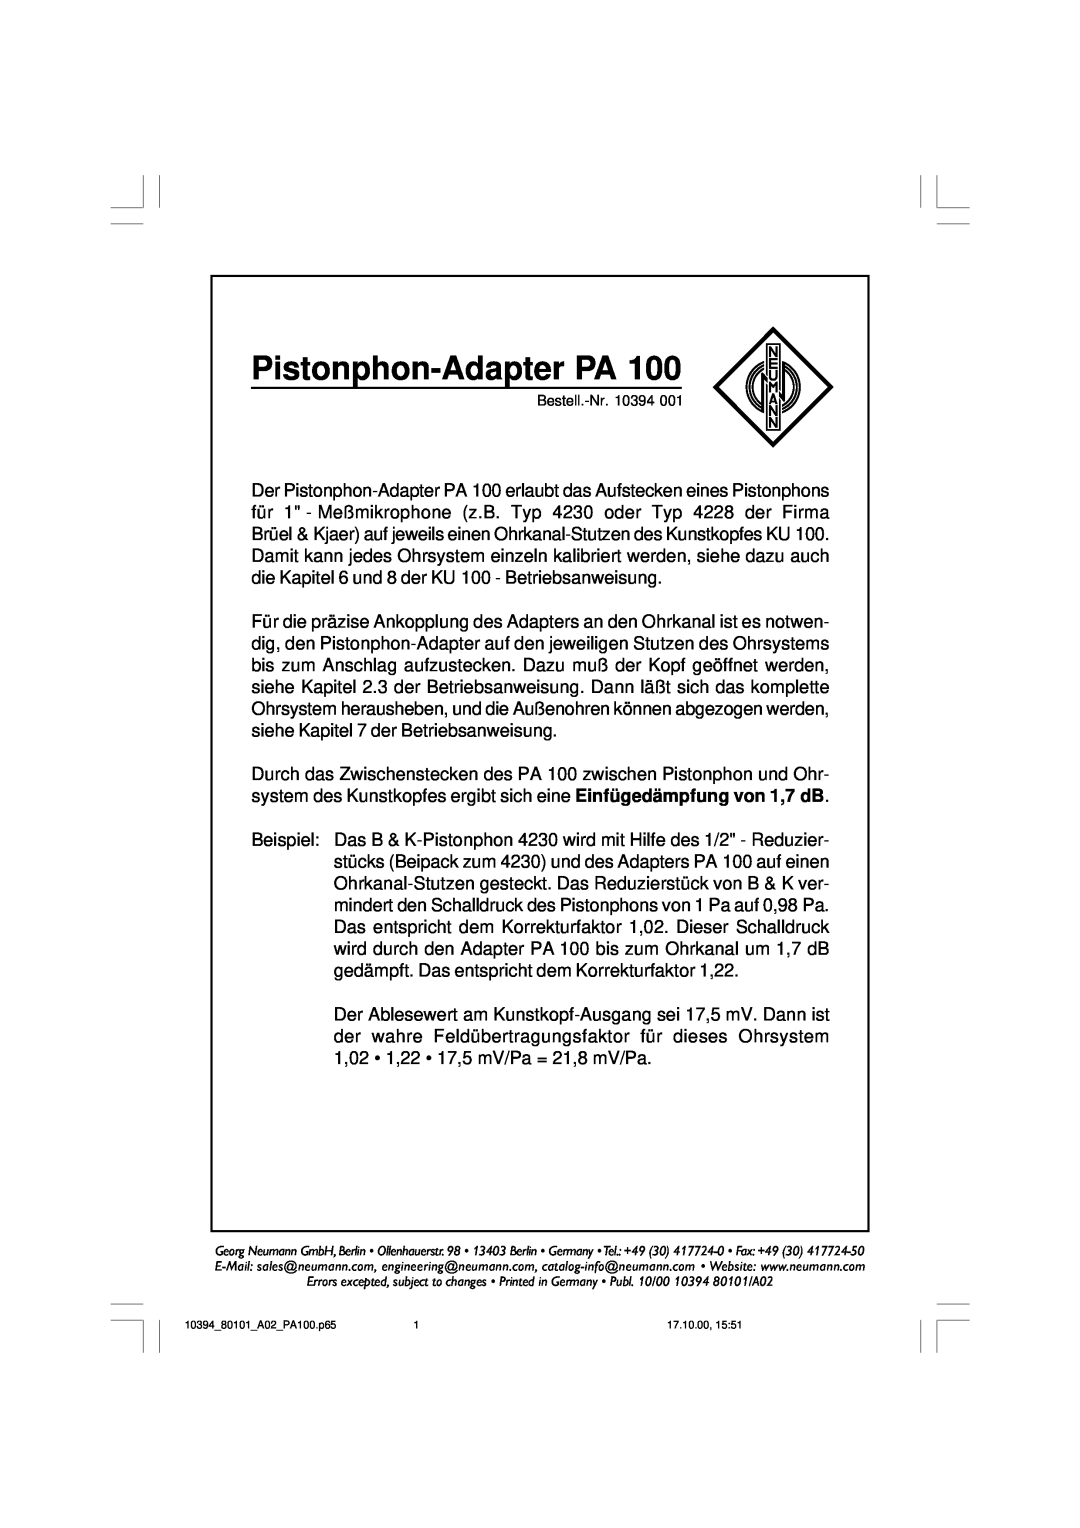 Neumann.Berlin PA 100 manual Pistonphon-Adapter PA, Bestell.-Nr. 10394 